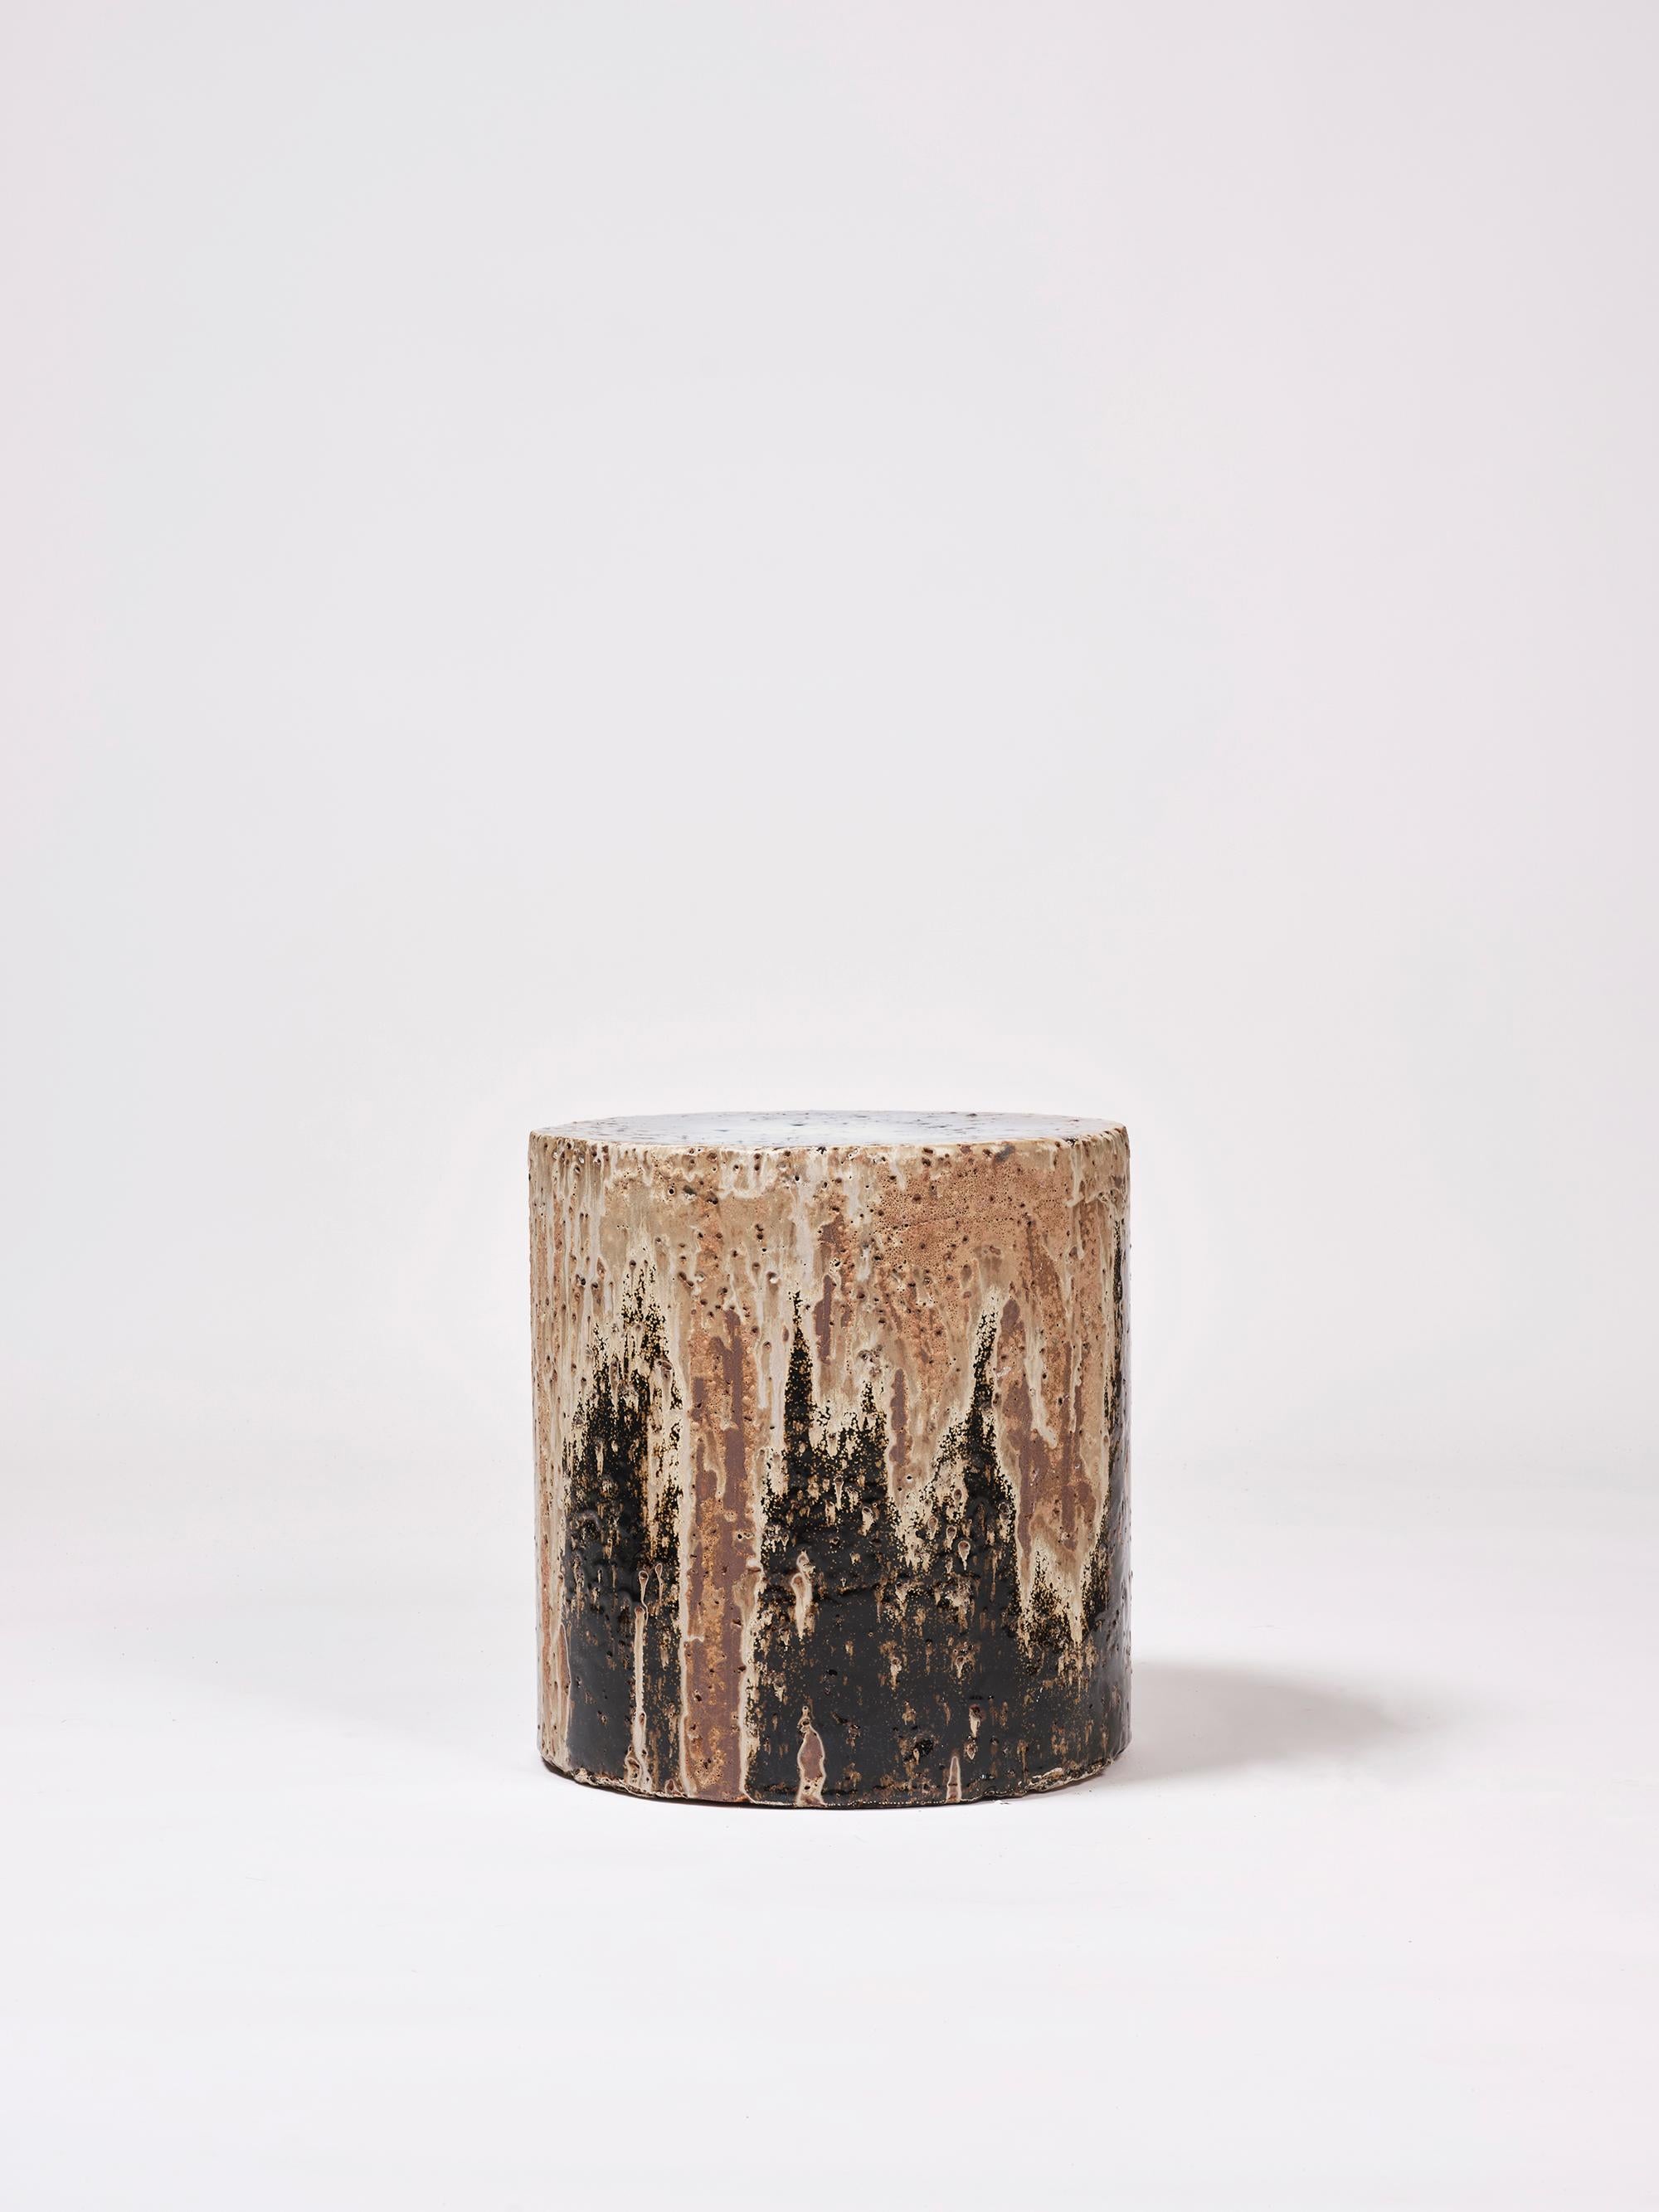 Spanish Contemporary Ceramic Side Table Column Stool Blue Black Beige Glazed Earthenware